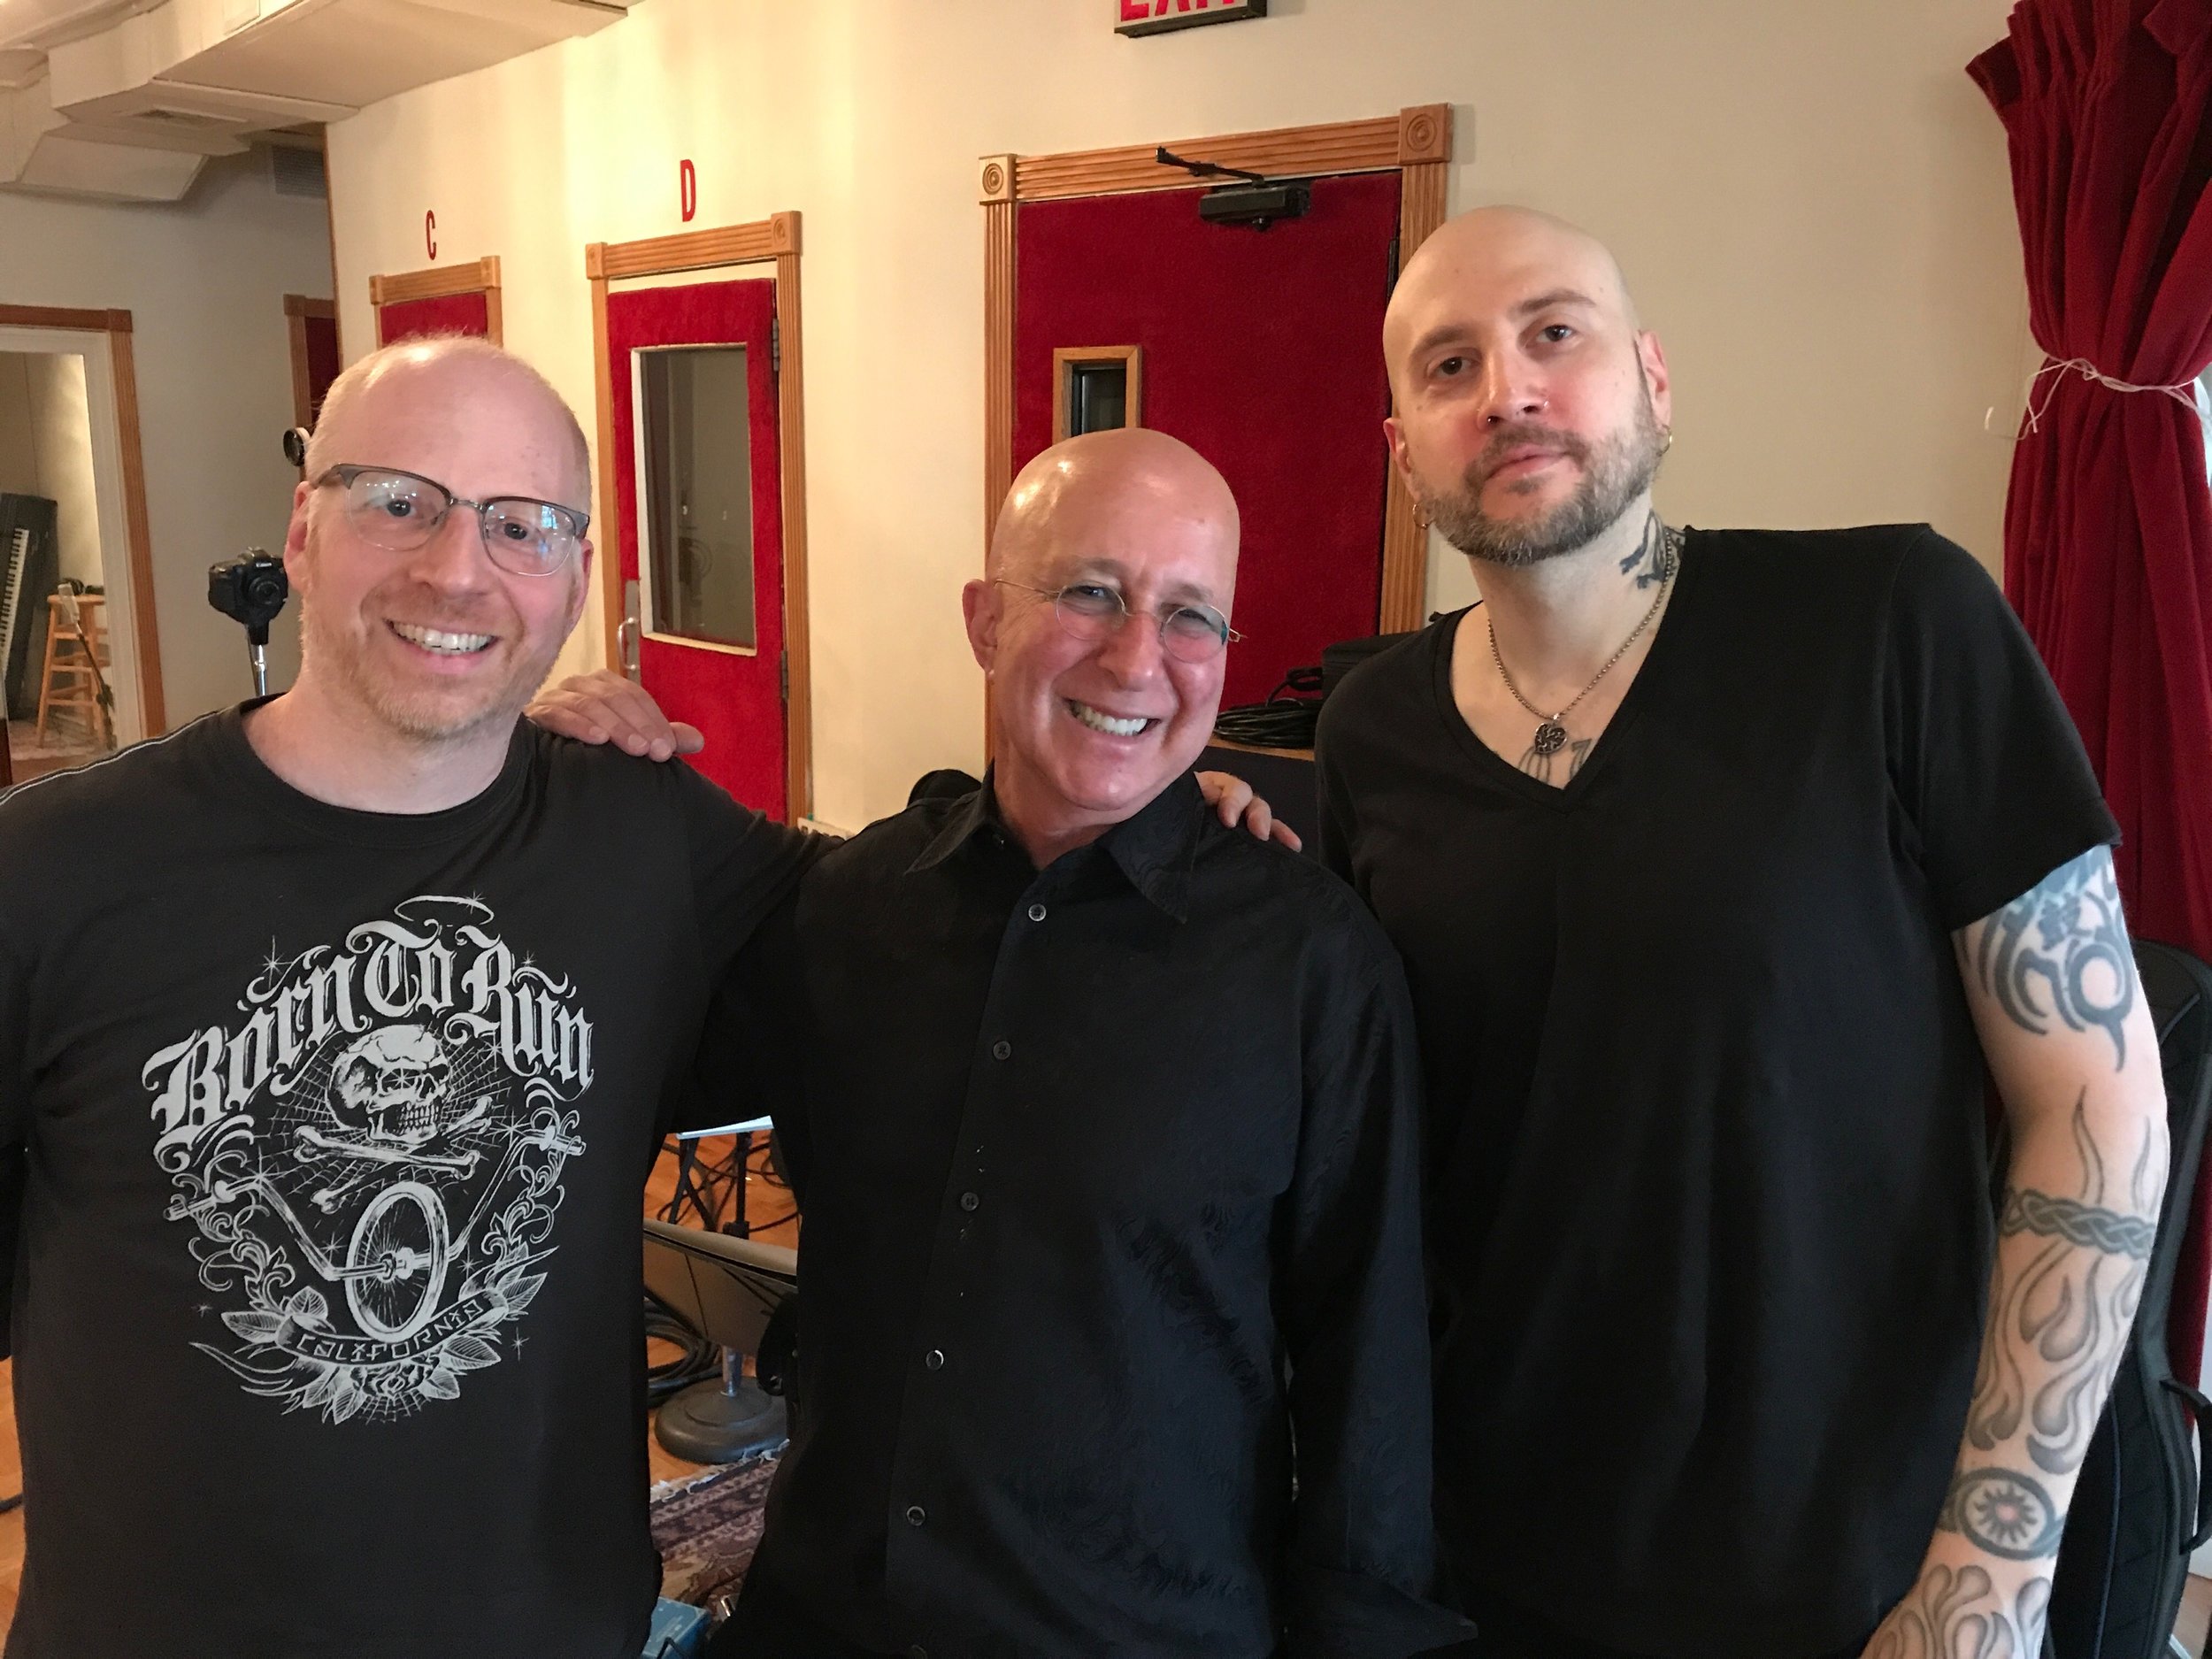 Oz Noy, Paul Shaffer, Stephen Wolf (3 bald jews!)